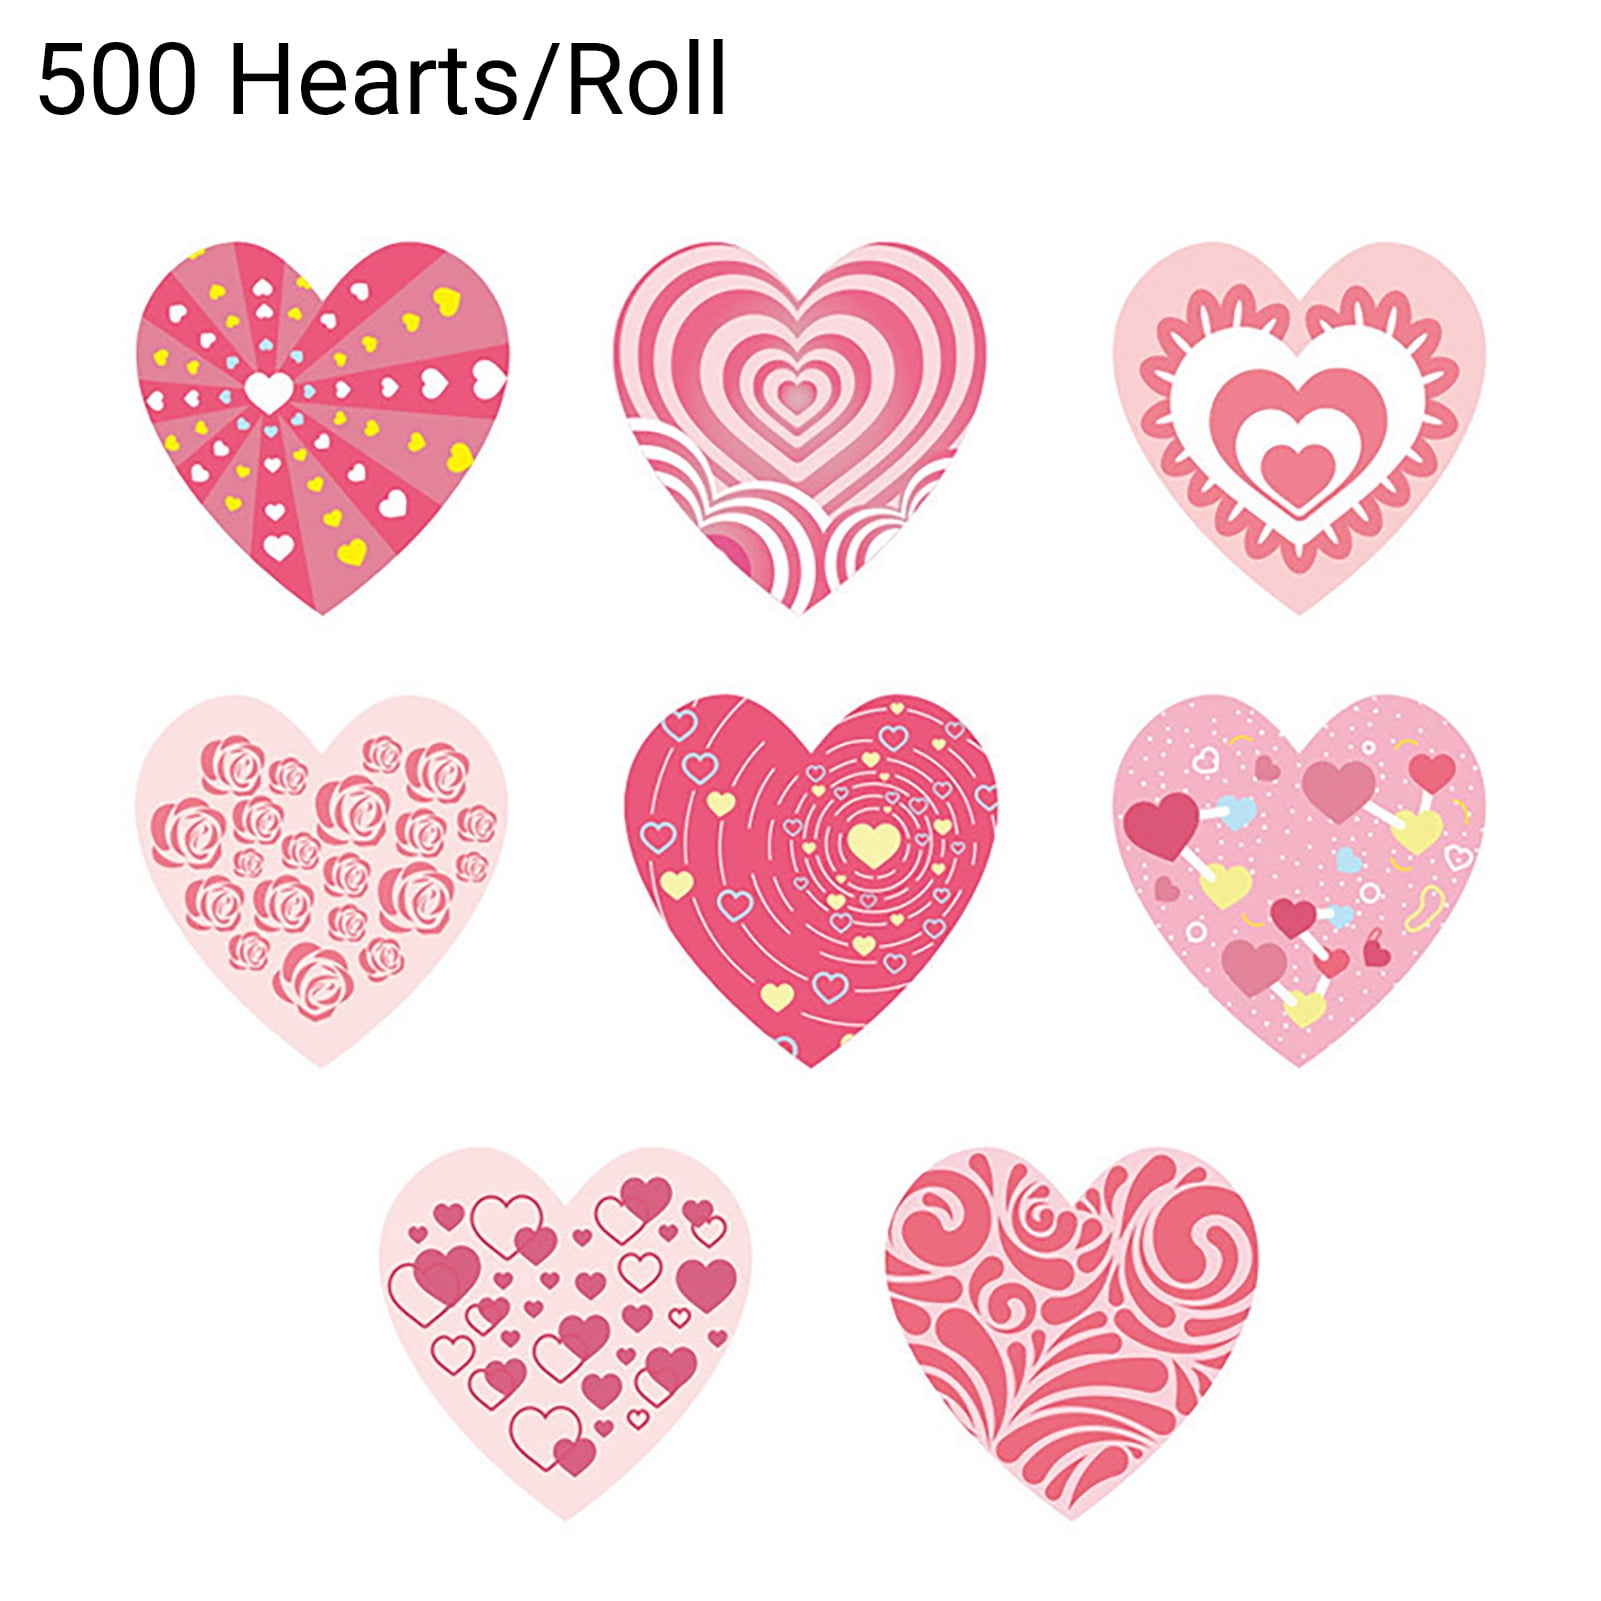 HEARTS LOVE VALENTINE'S EK Success STICKO Classic & Dimensional Stickers 